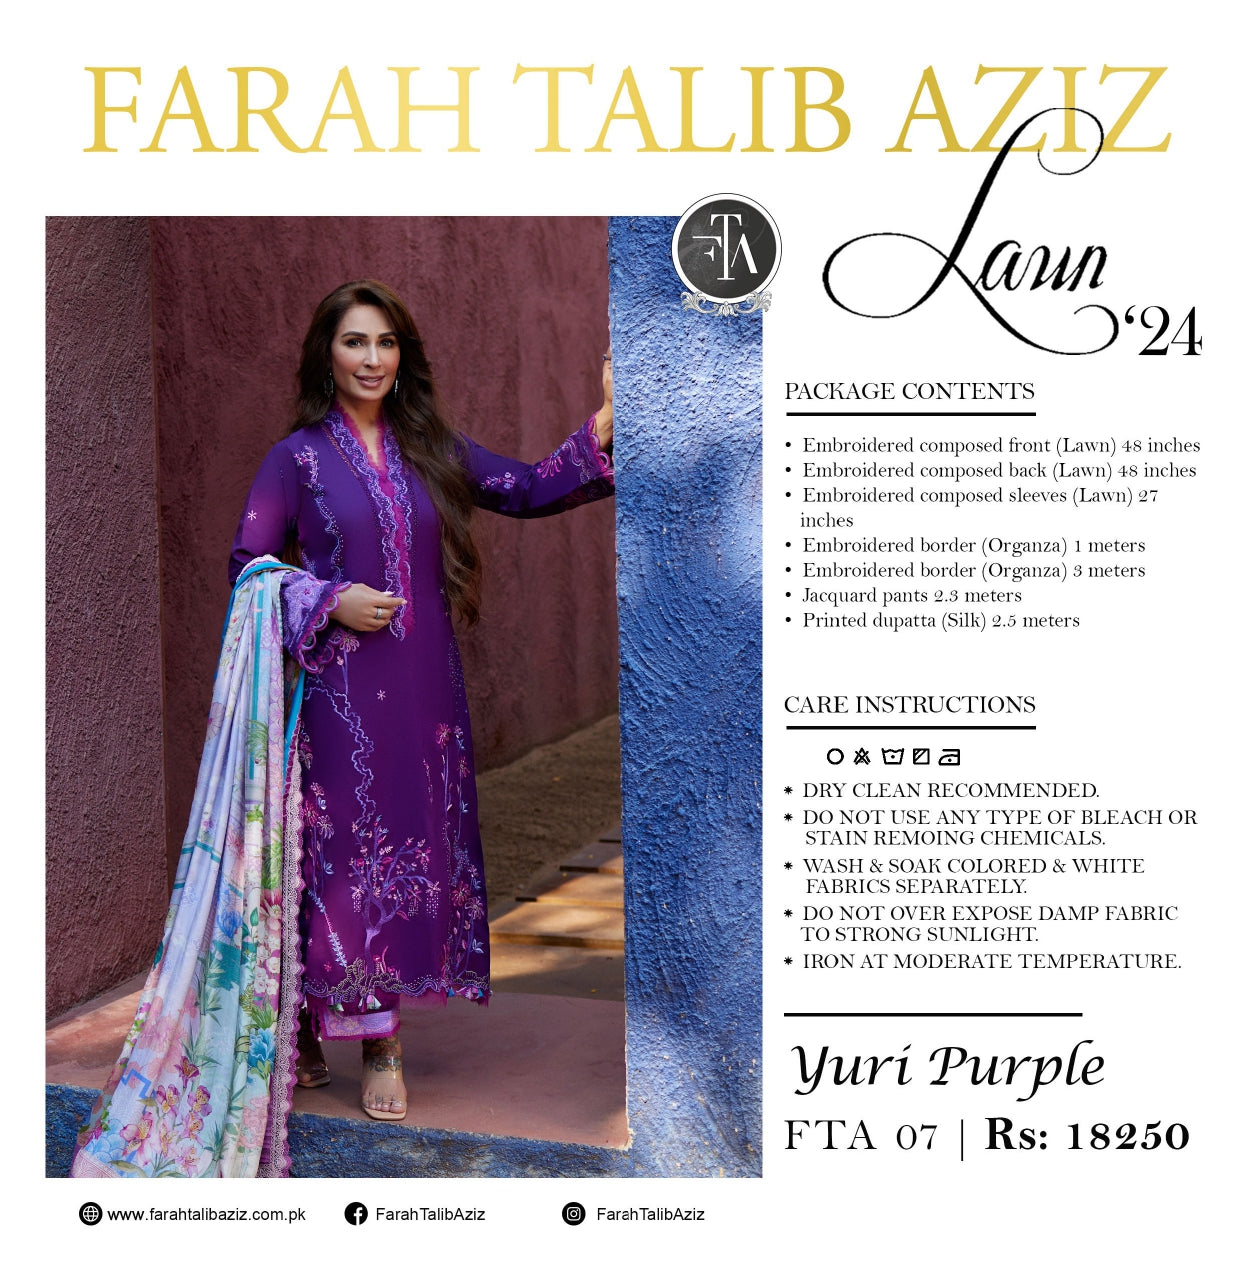 Farah Talib Aziz-24-07 YURI PURPLE